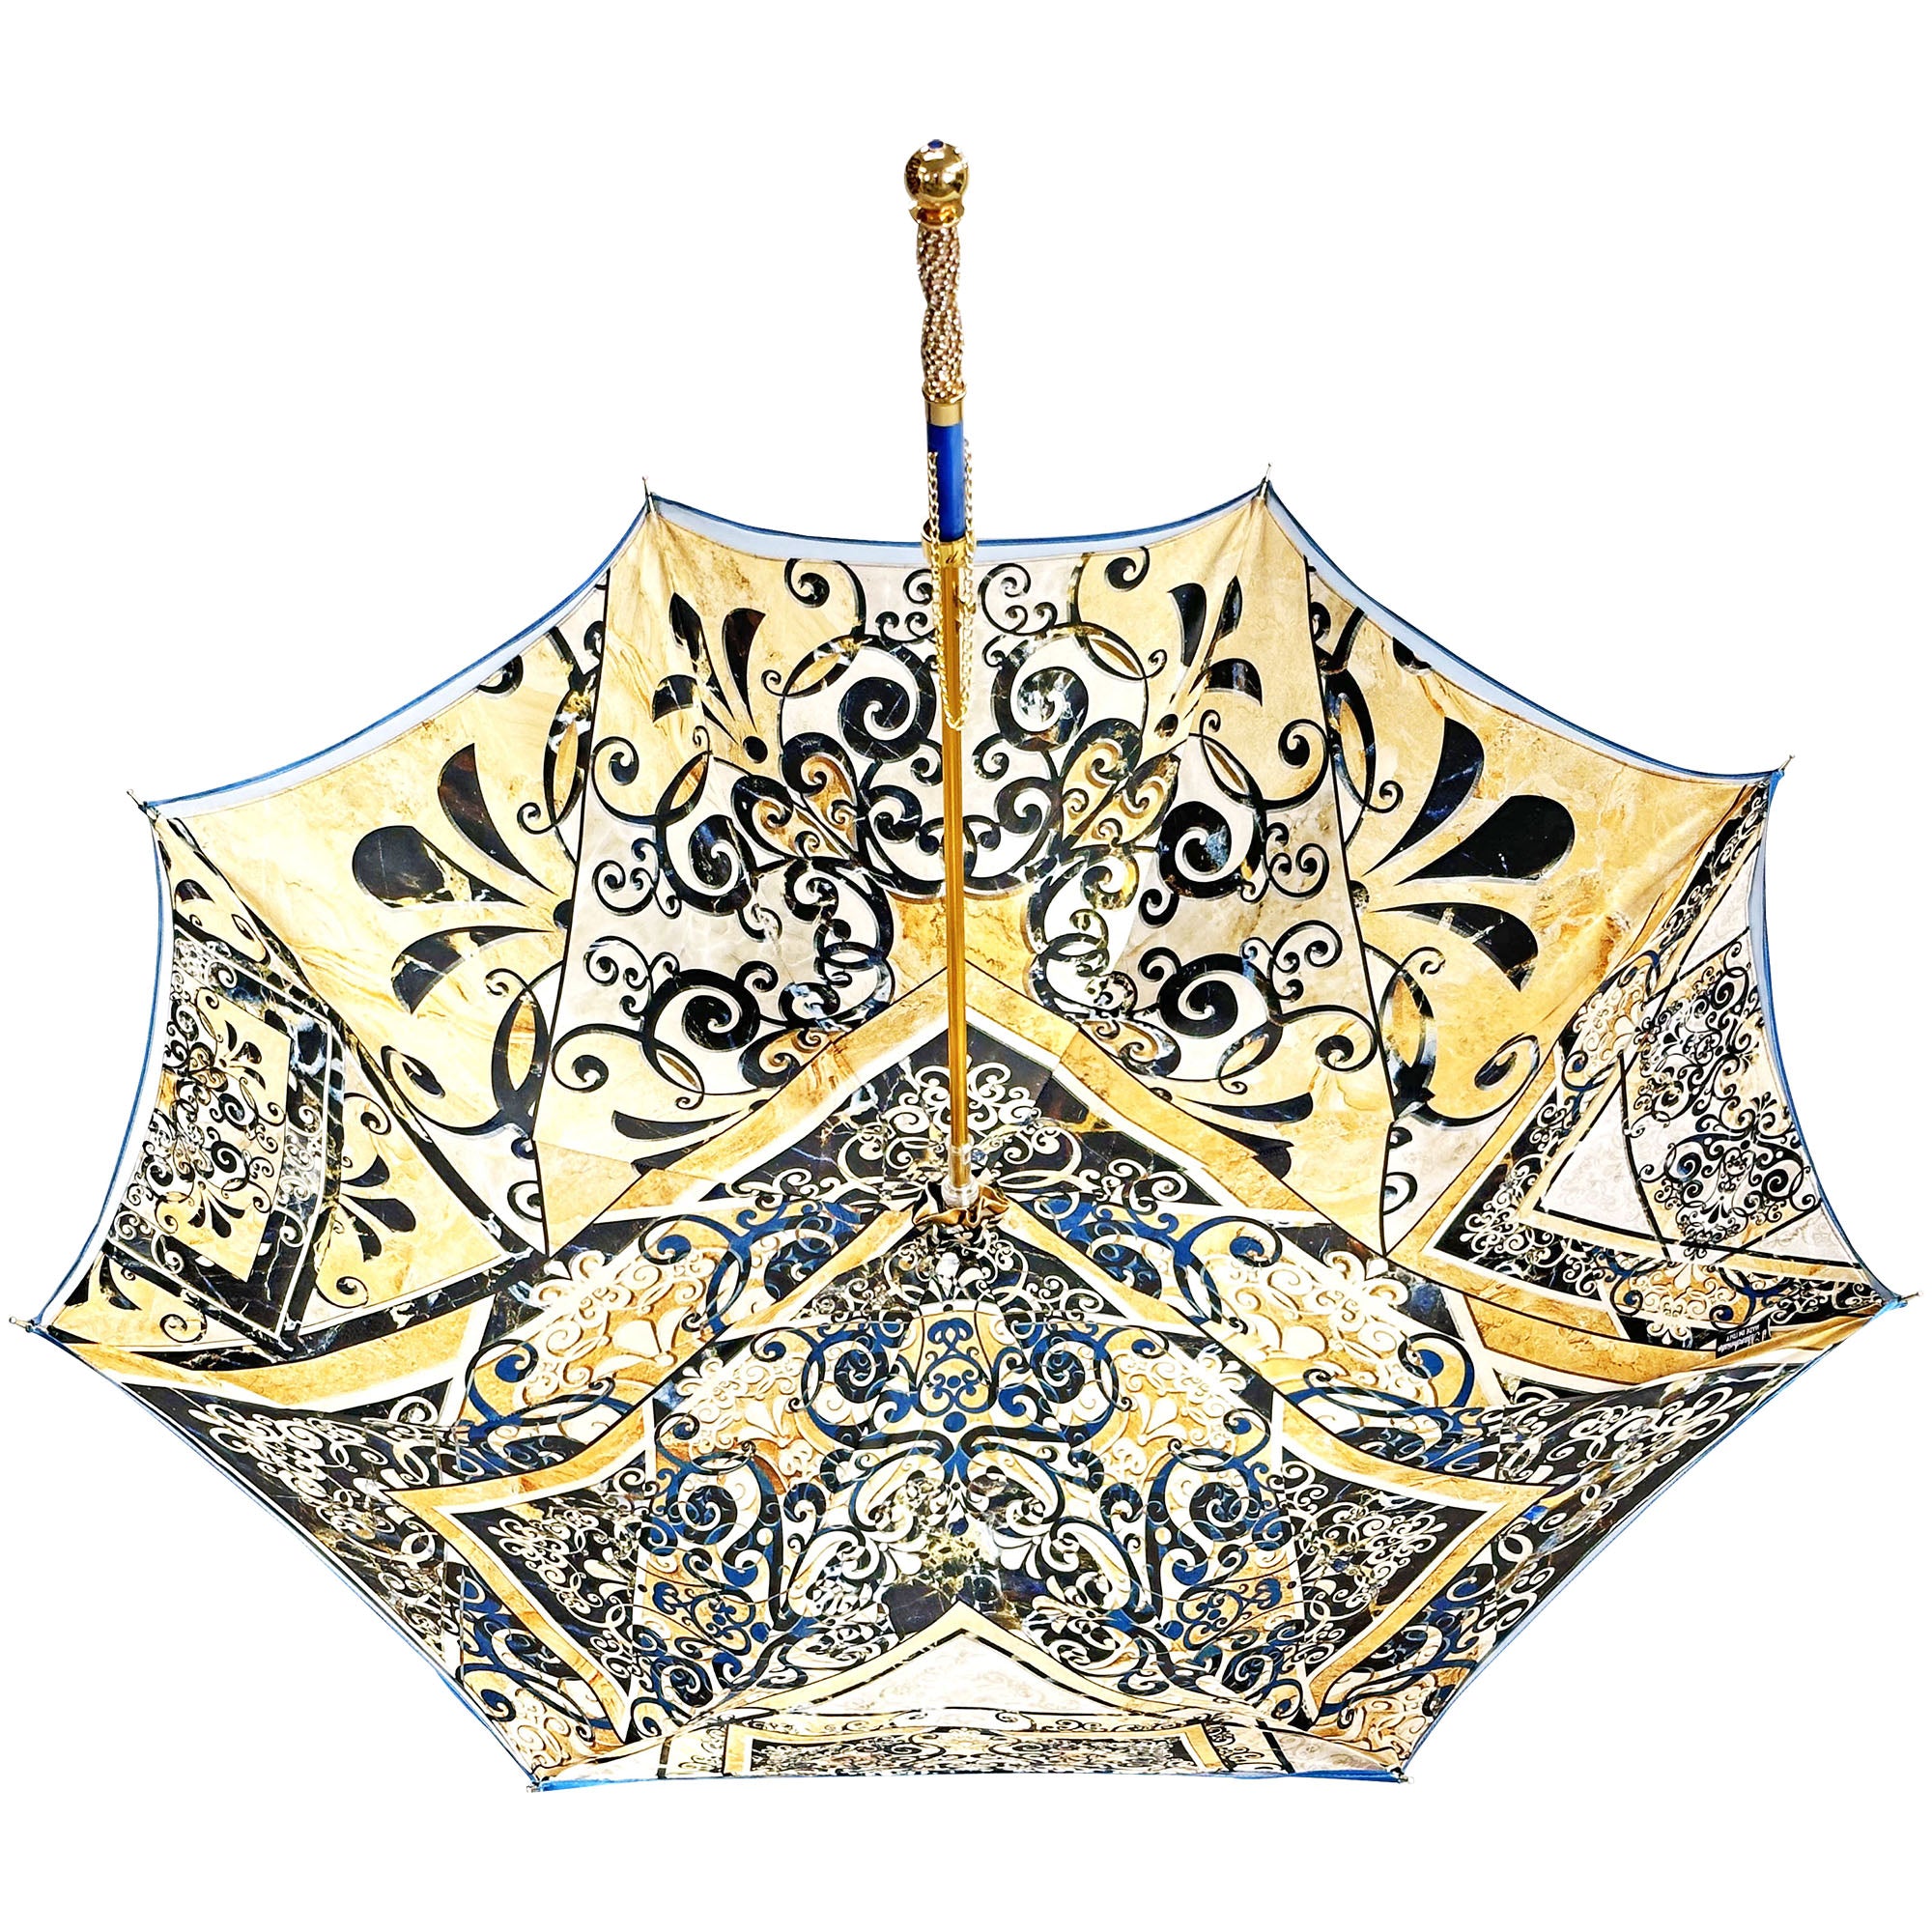 Handmade umbrella with exclusive Majolica design